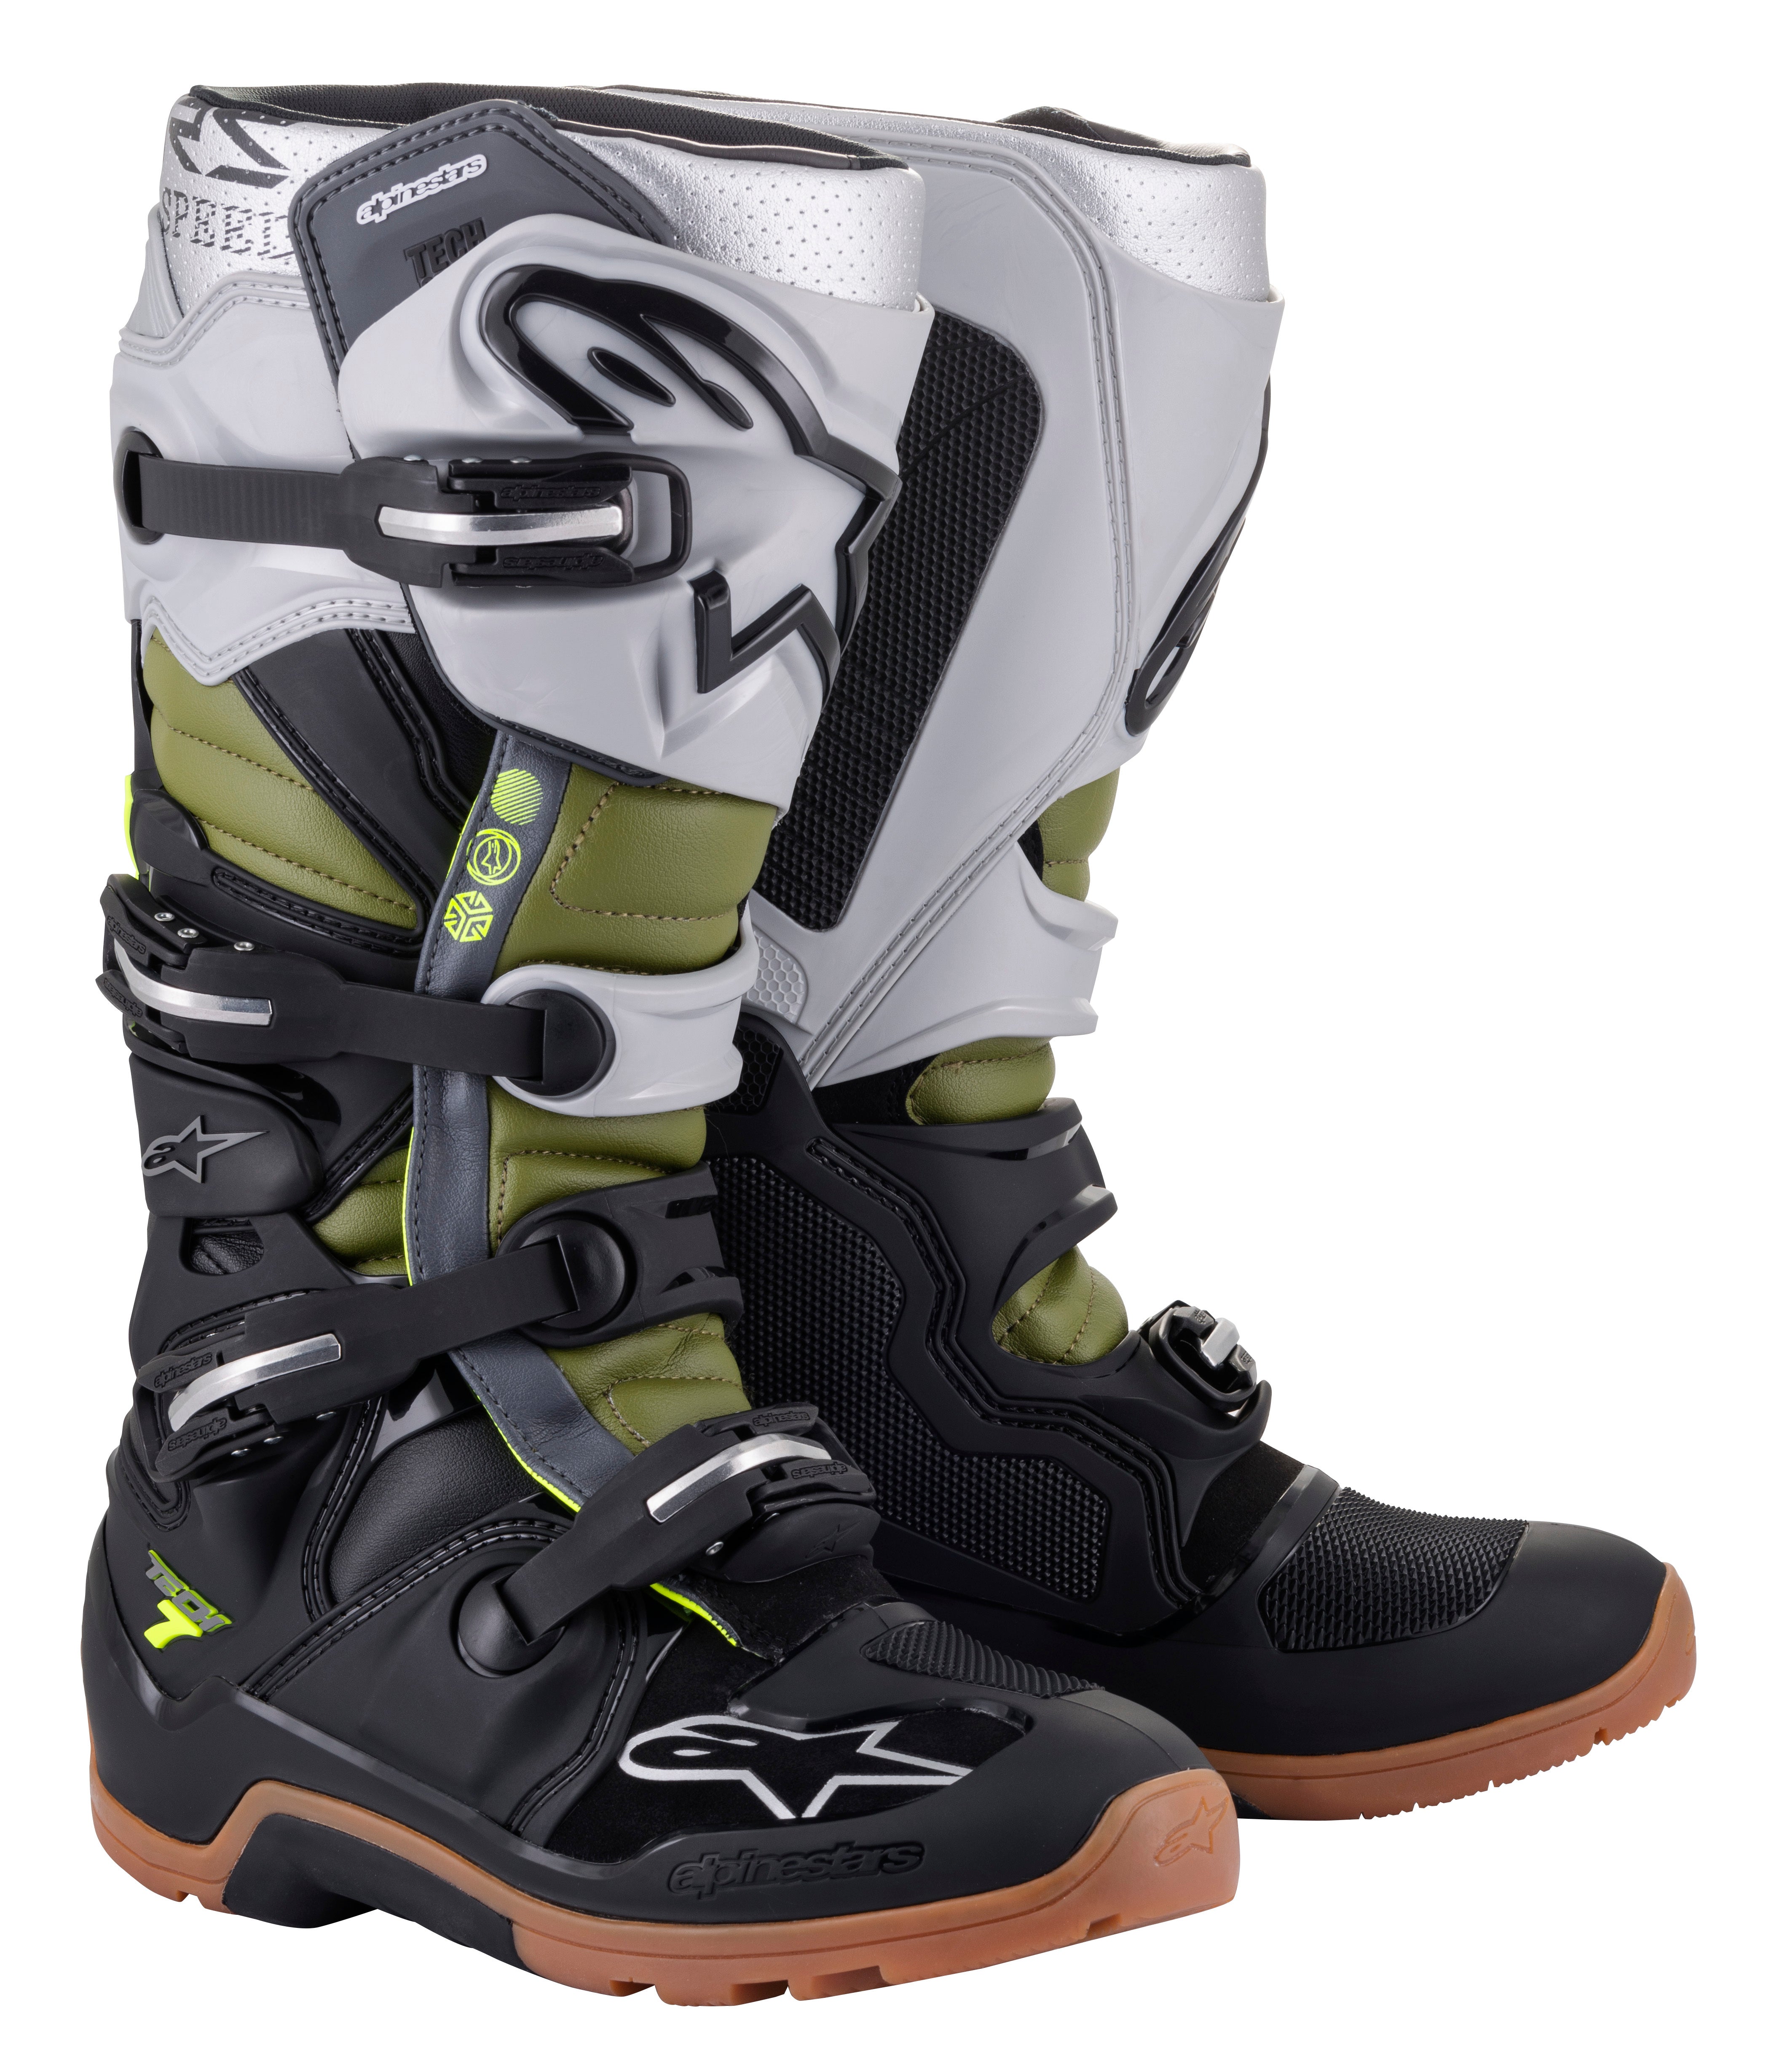 Alpinestars - Tech 7 Enduro Boots